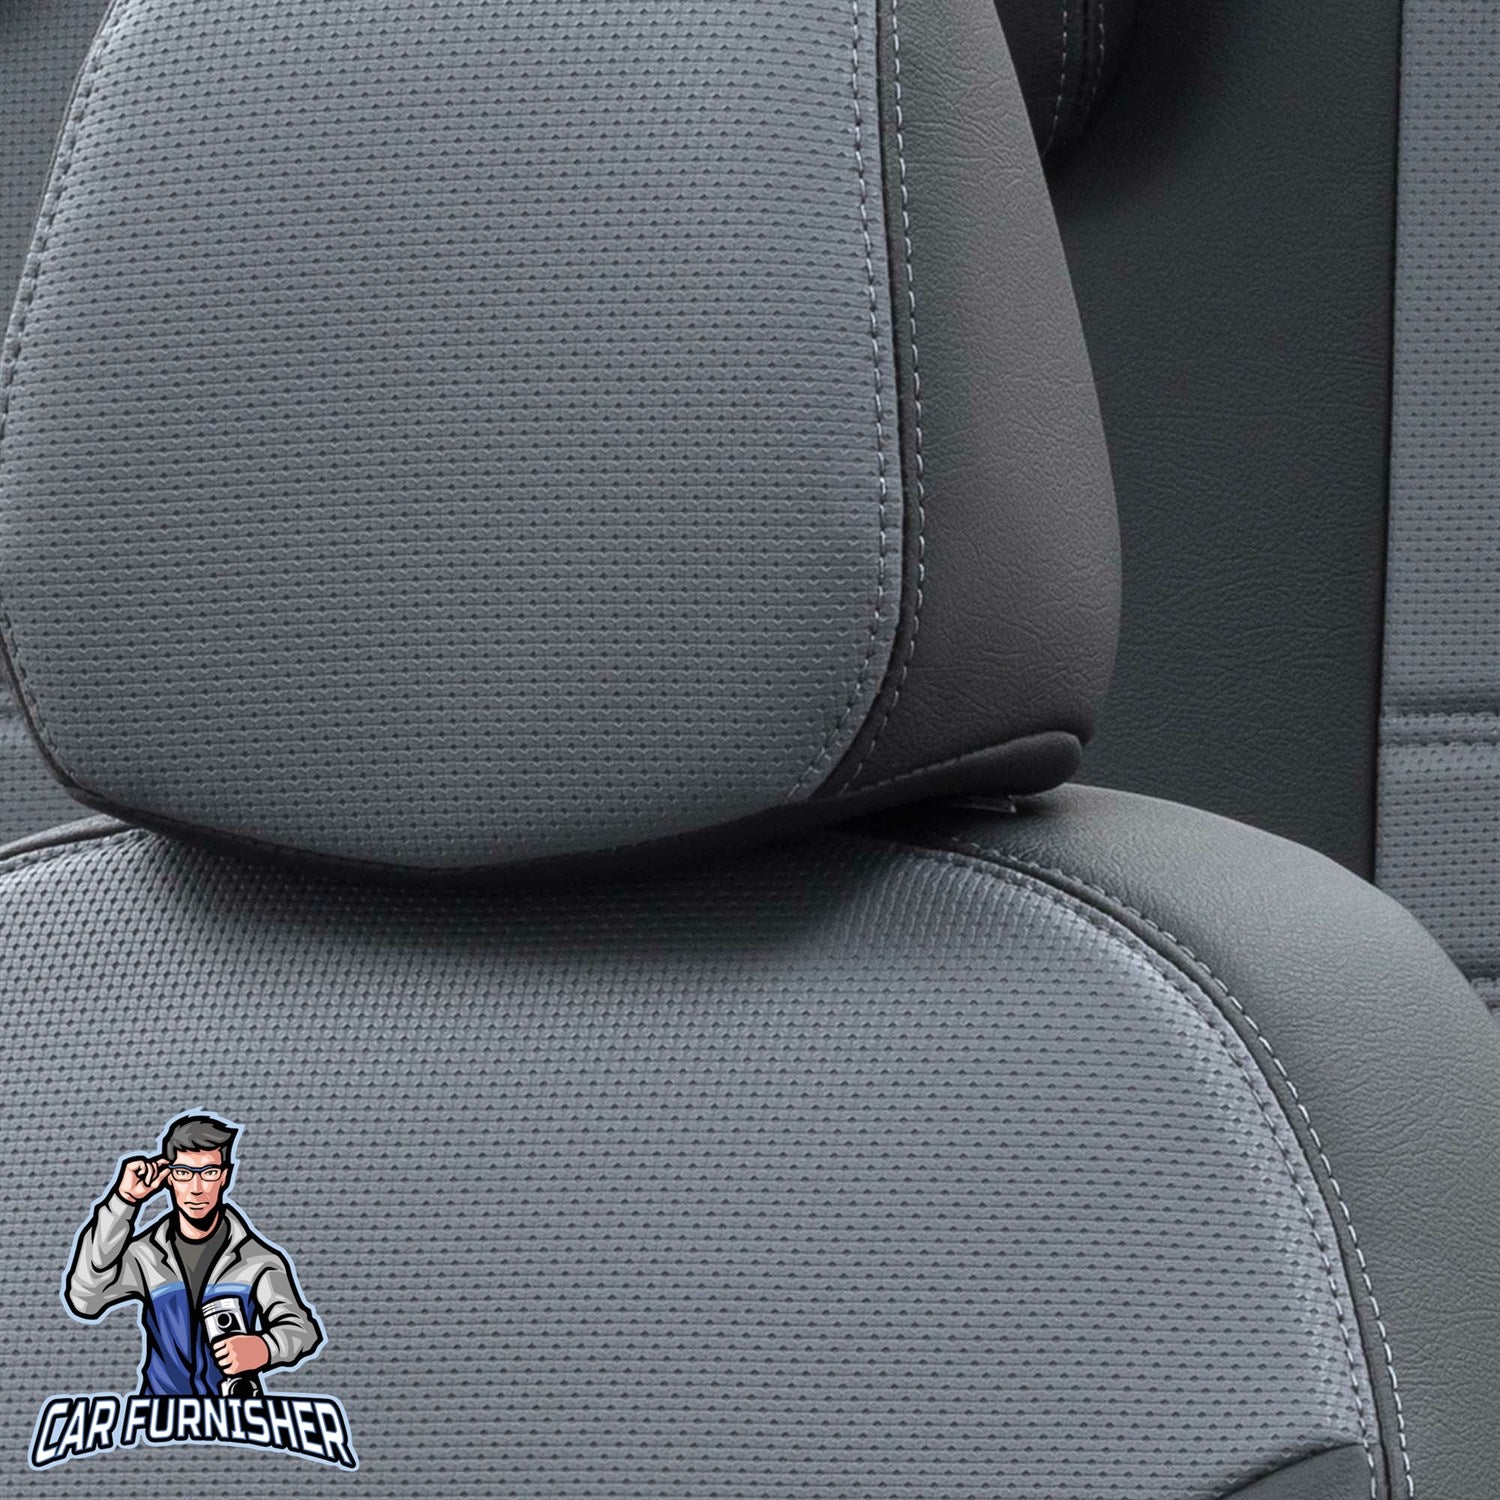 Hyundai Kona Seat Covers New York Leather Design Smoked Black Leather